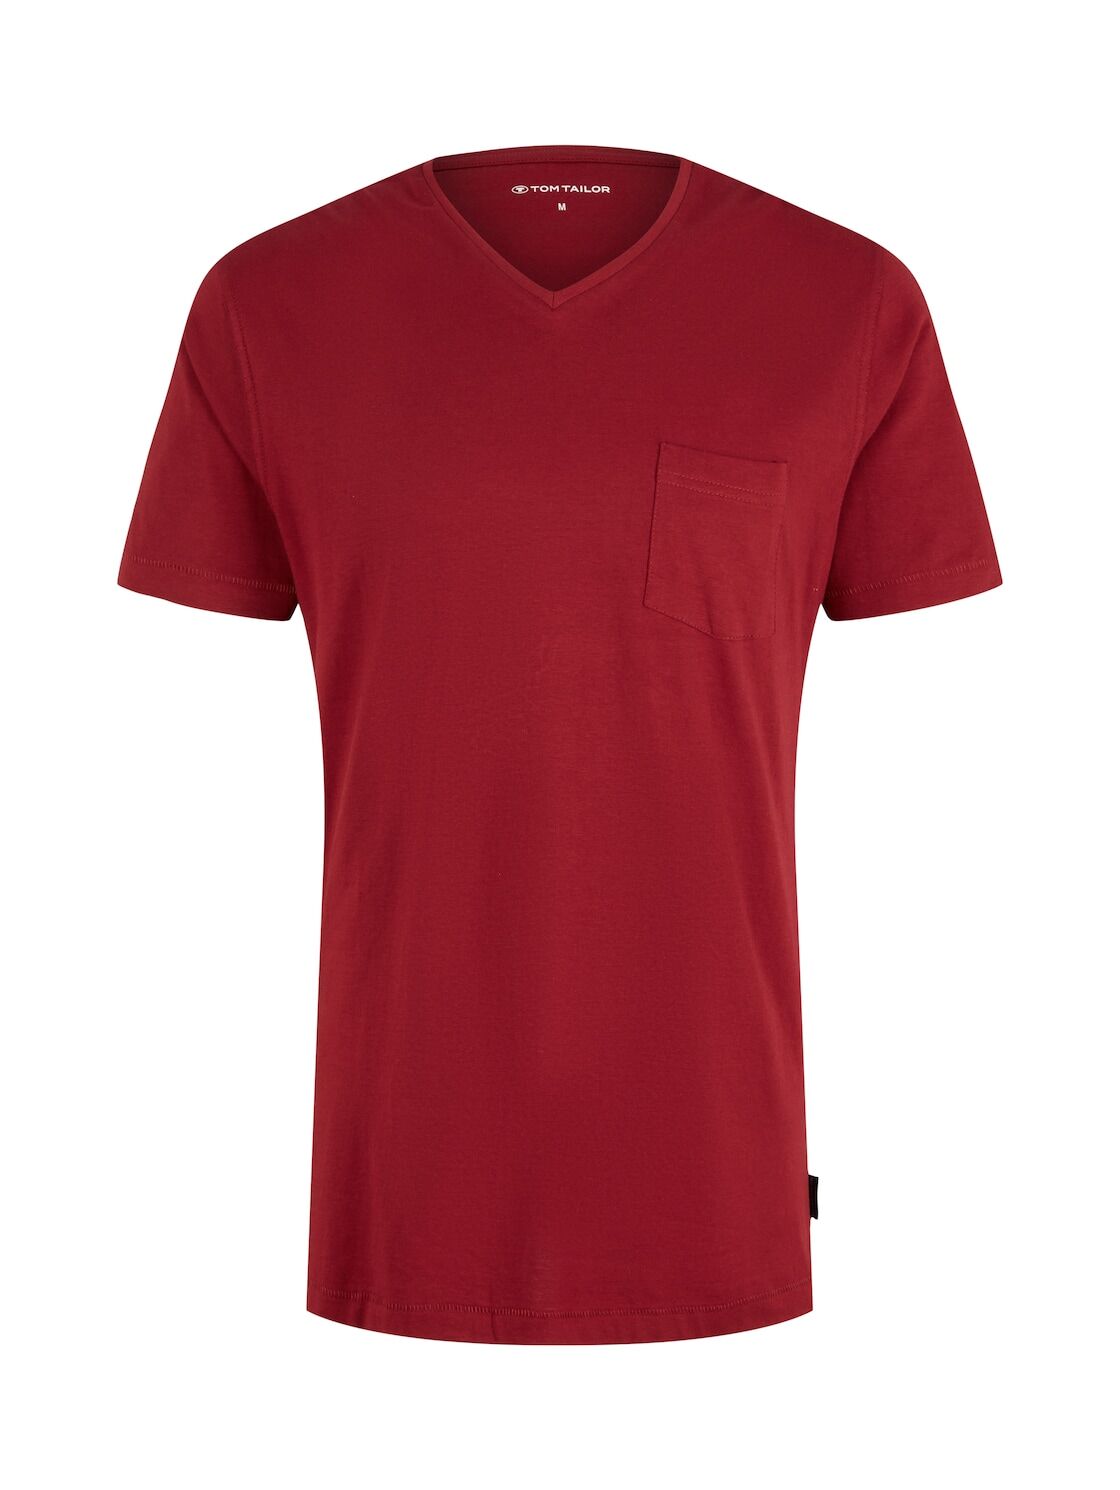 TOM TAILOR Herren Pyjama T-Shirt, rot, unifarben, Gr.50/M